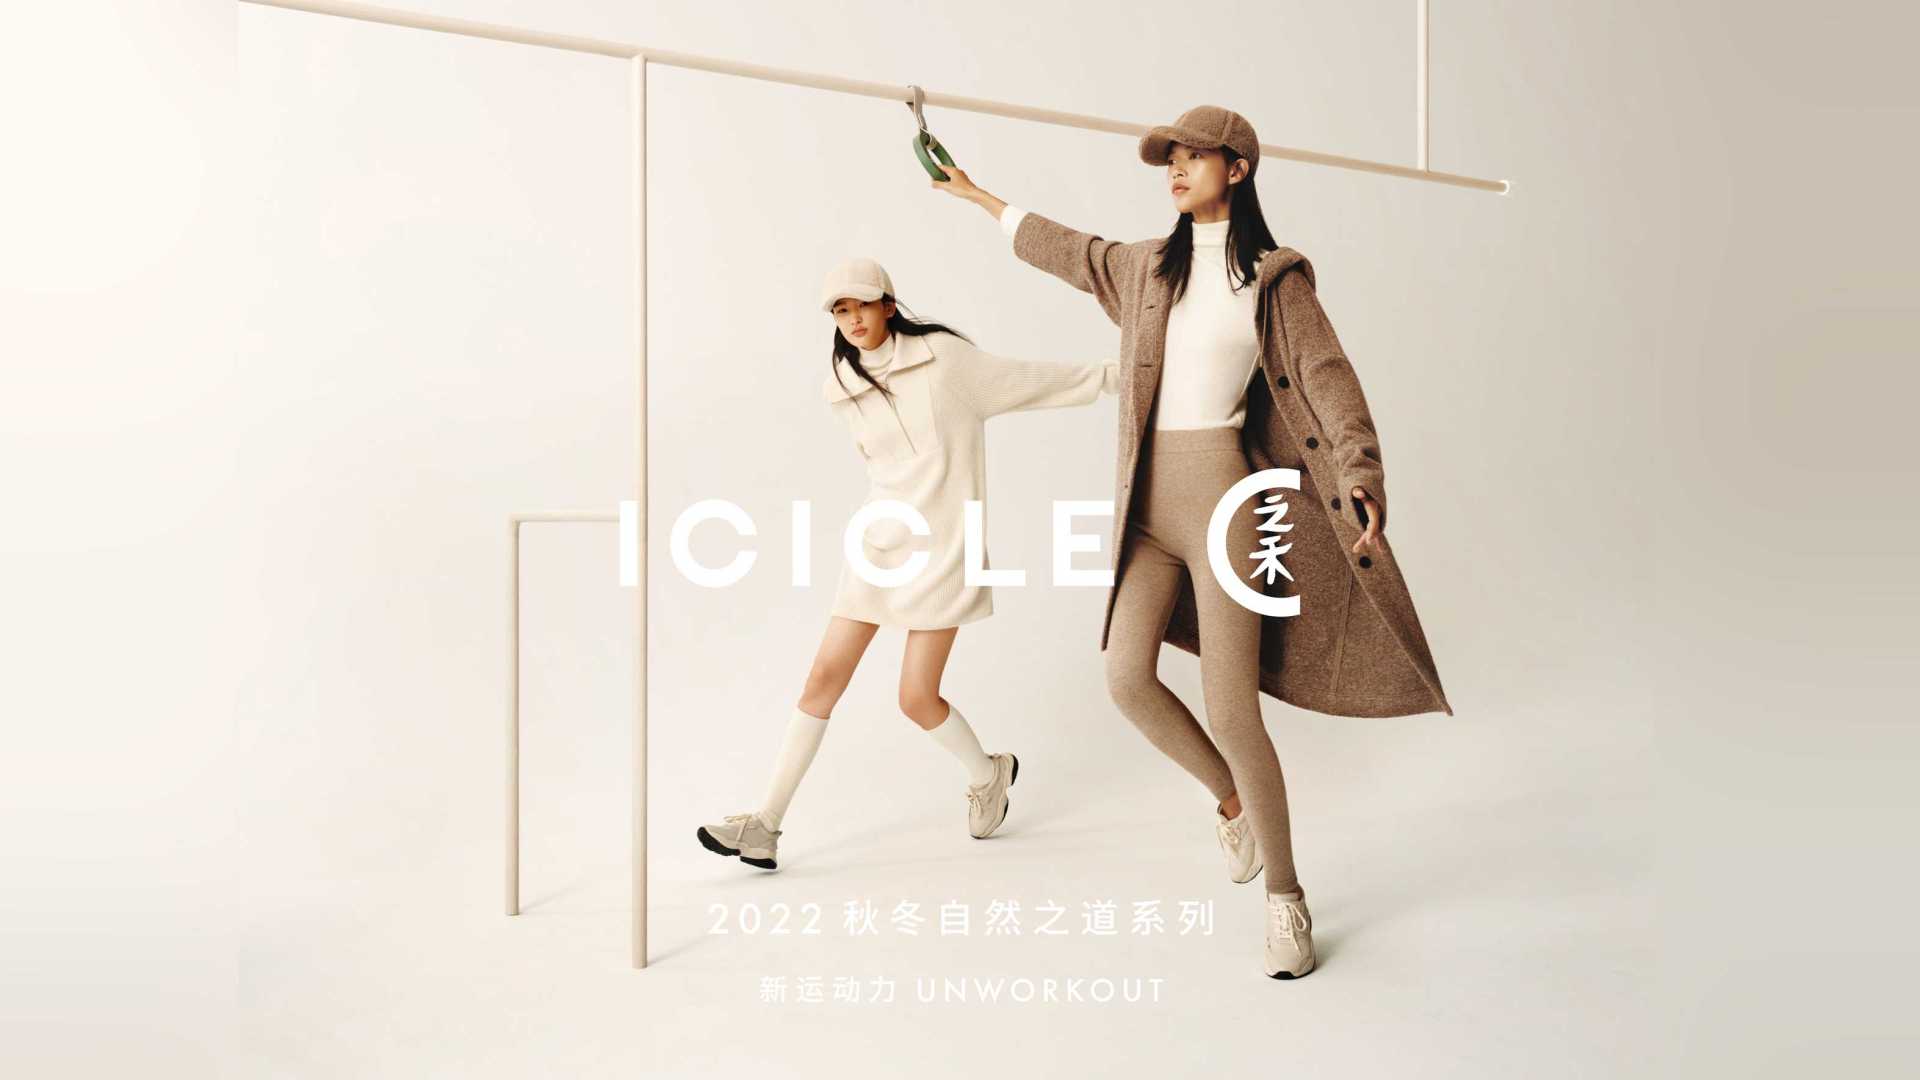 【ICICLE】22秋冬自然之道系列——新运动力